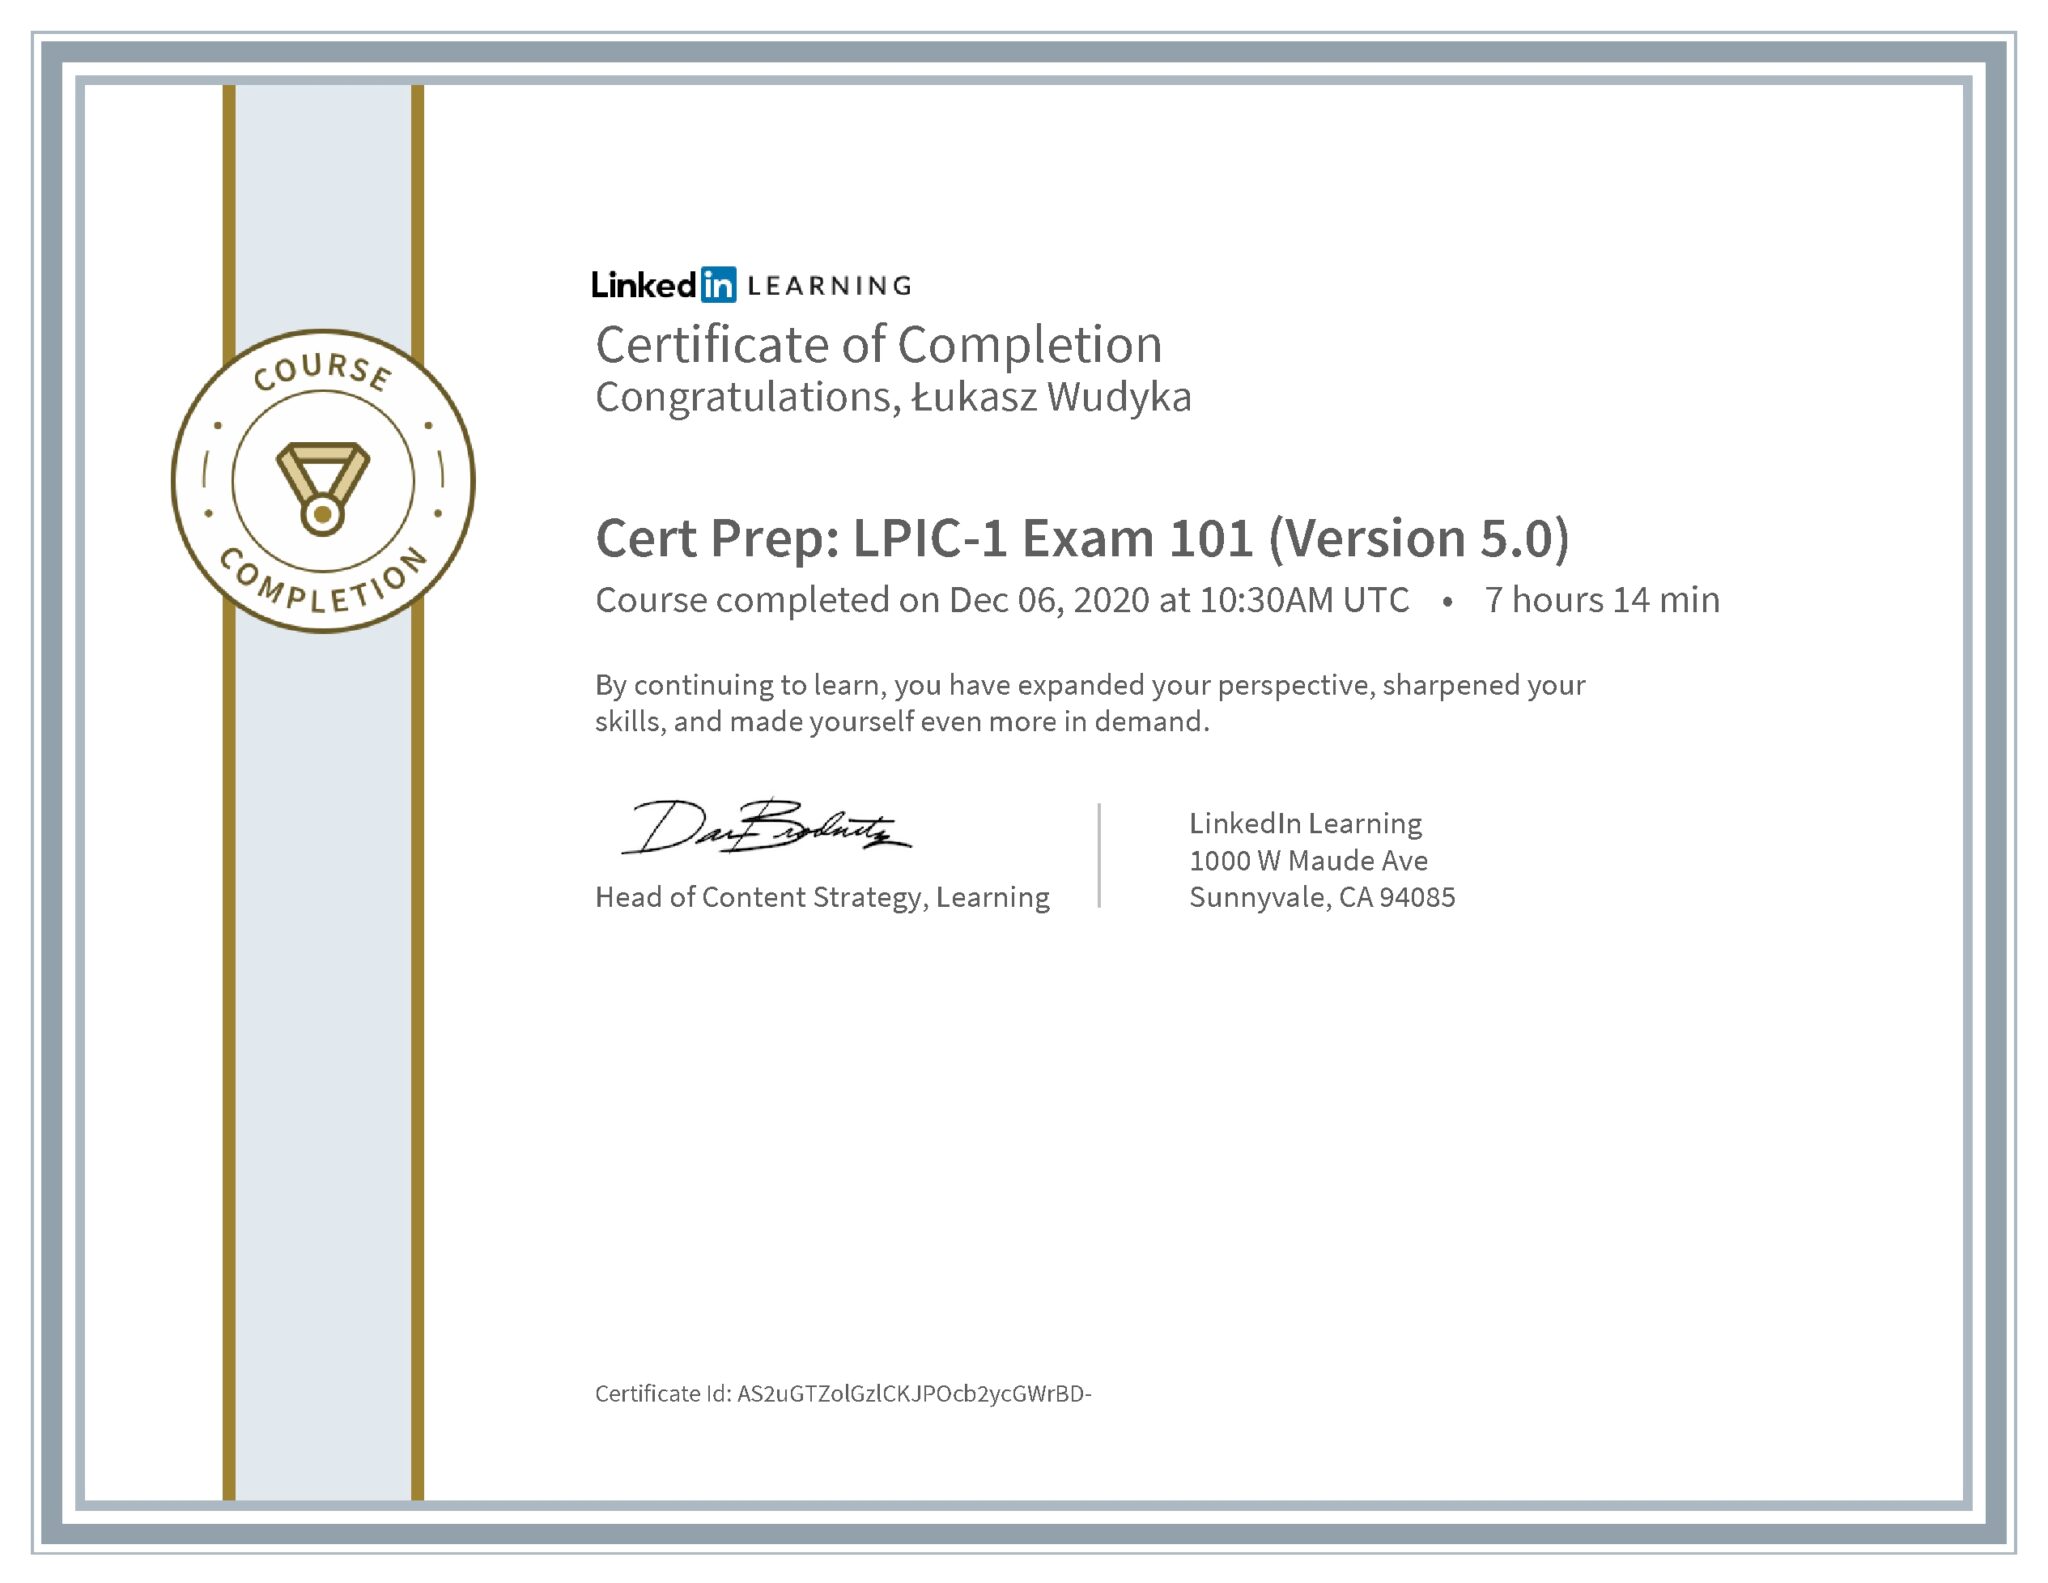 Łukasz Wudyka certyfikat LinkedIn Cert Prep: LPIC-1 Exam 101 (Version 5.0)